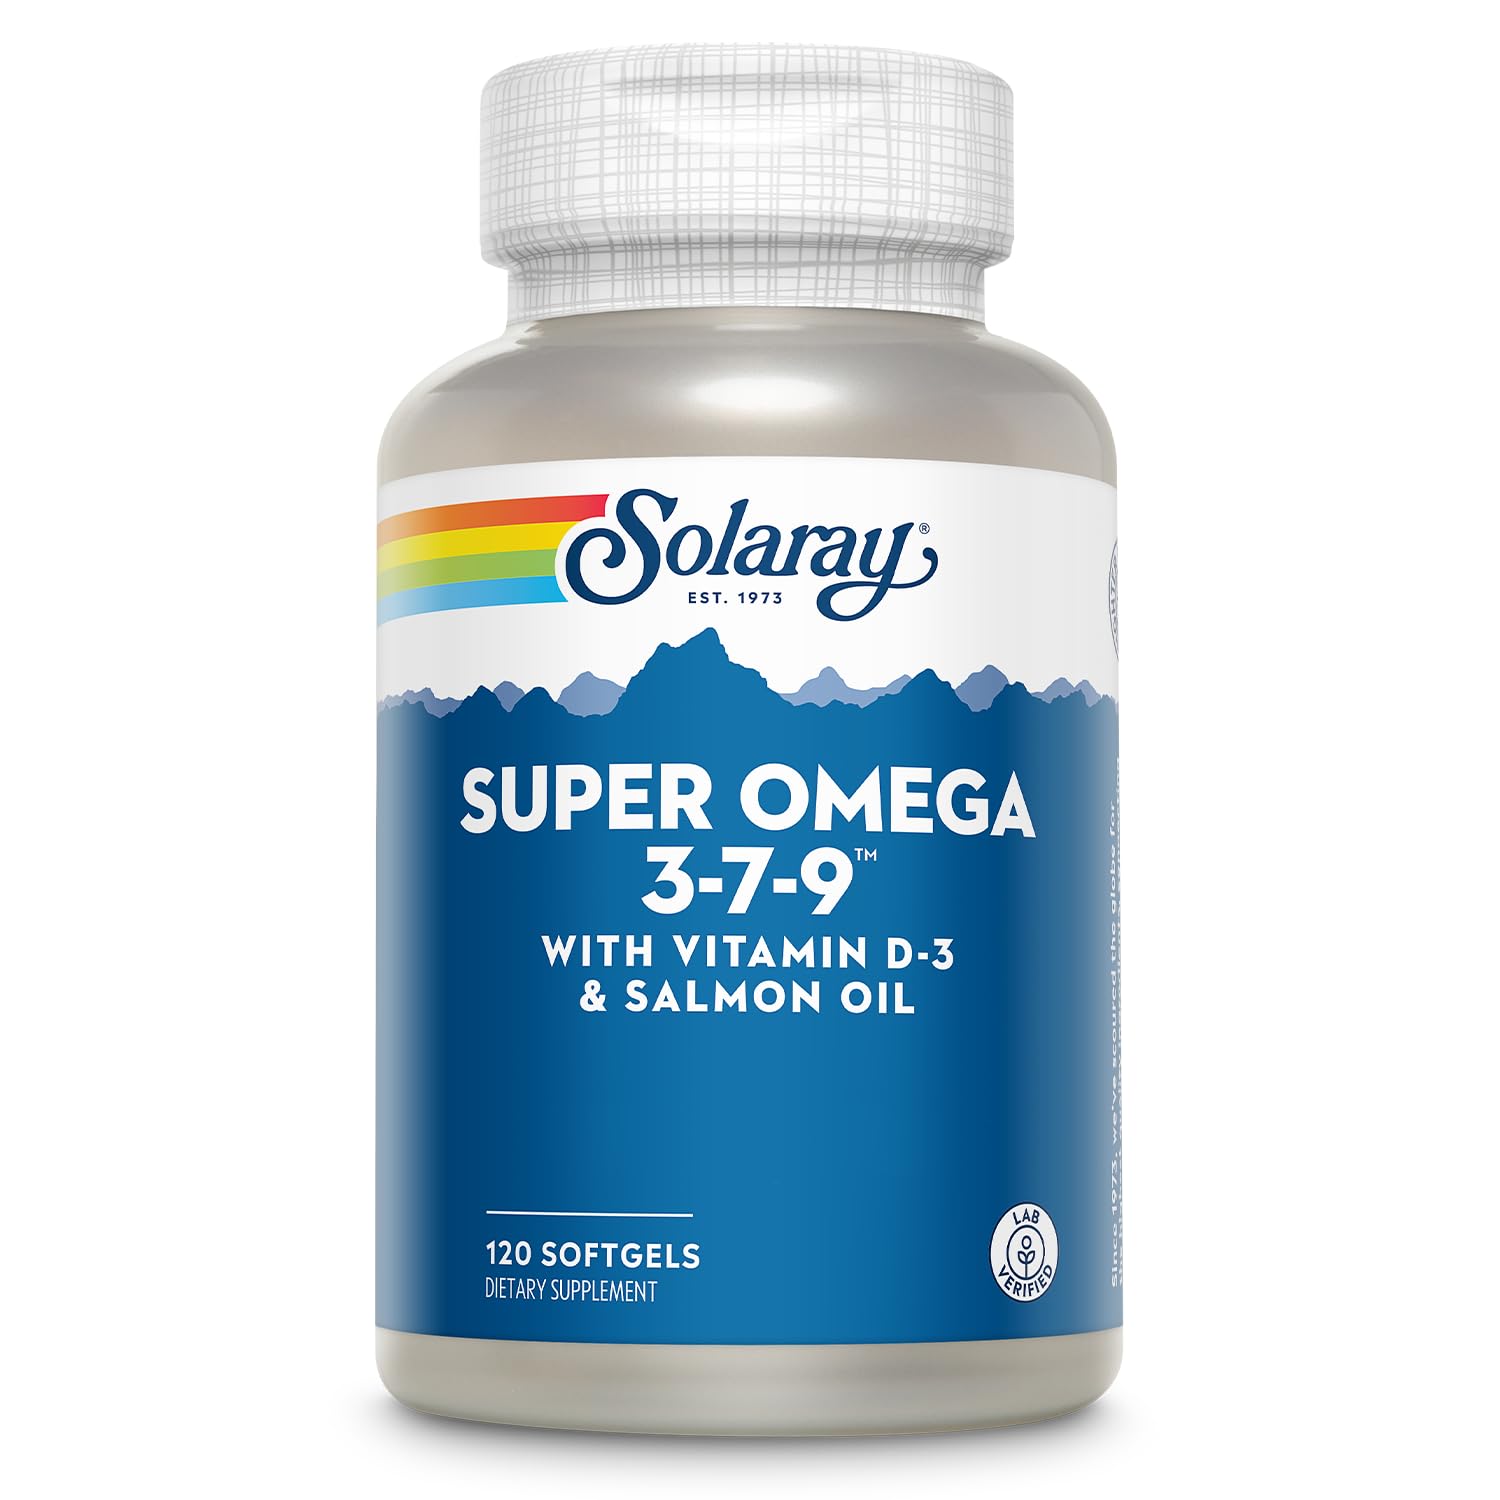 Solaray Super Omega 3-7-9 120ct Softgel